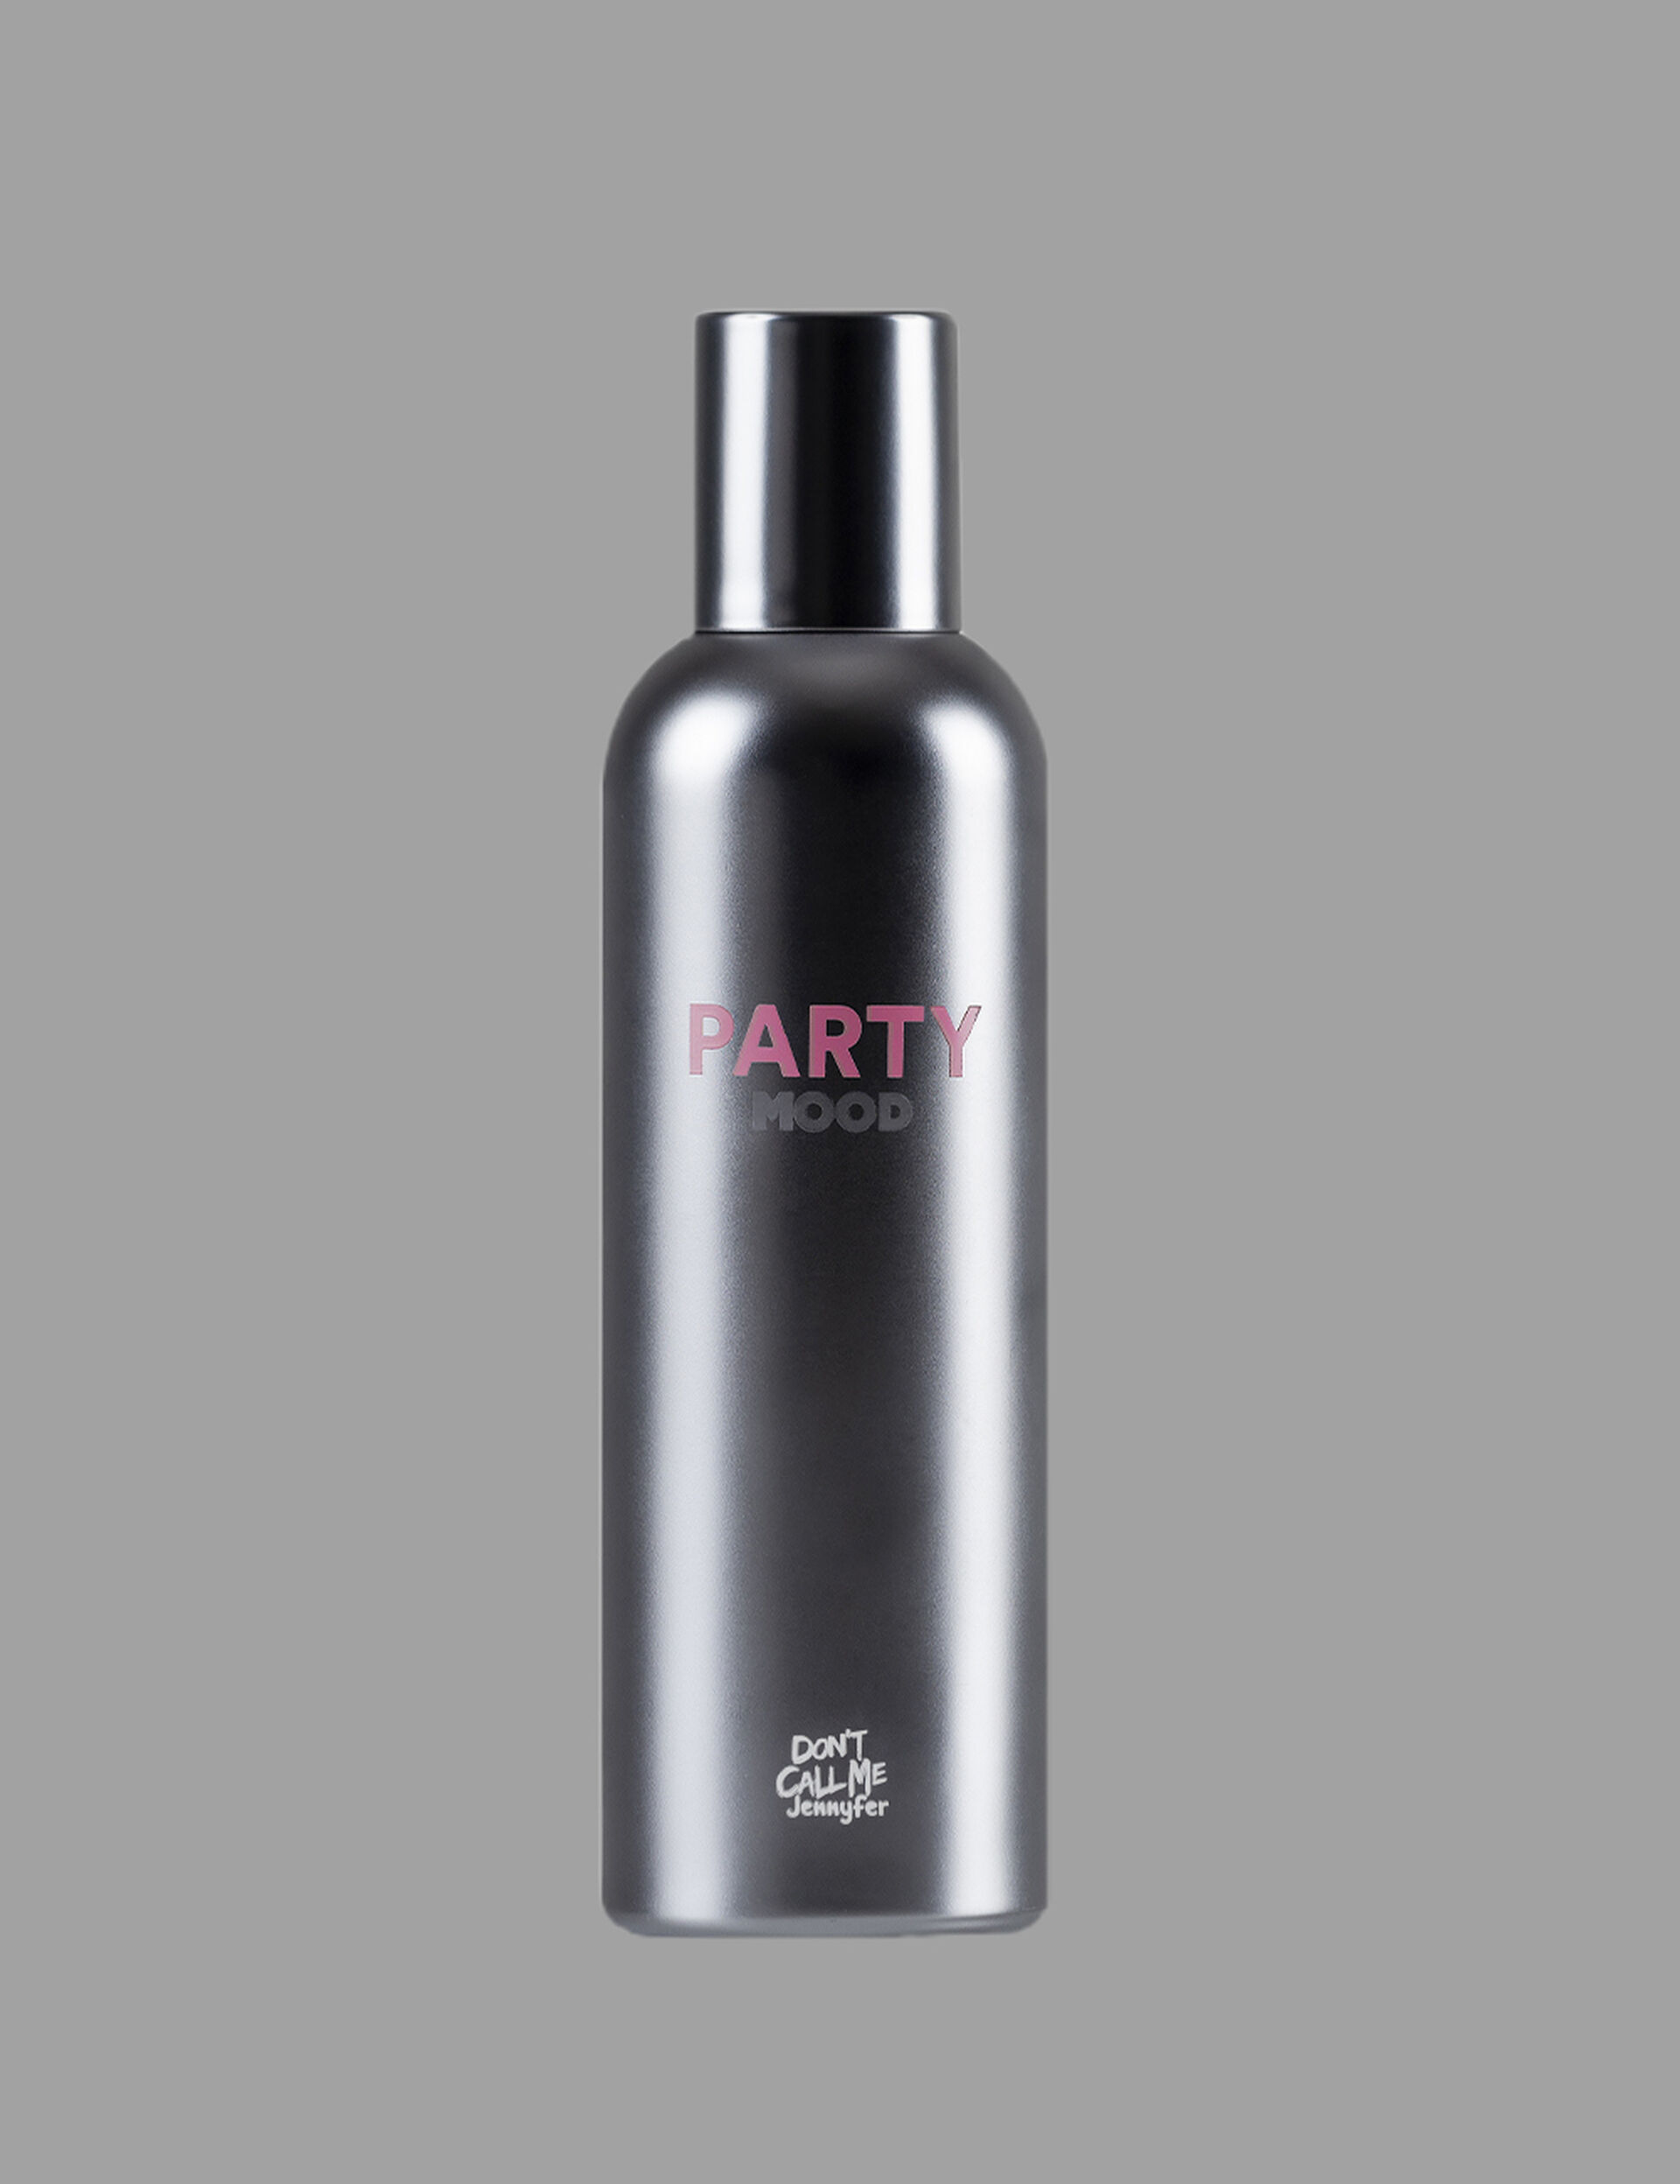 PARTY perfume